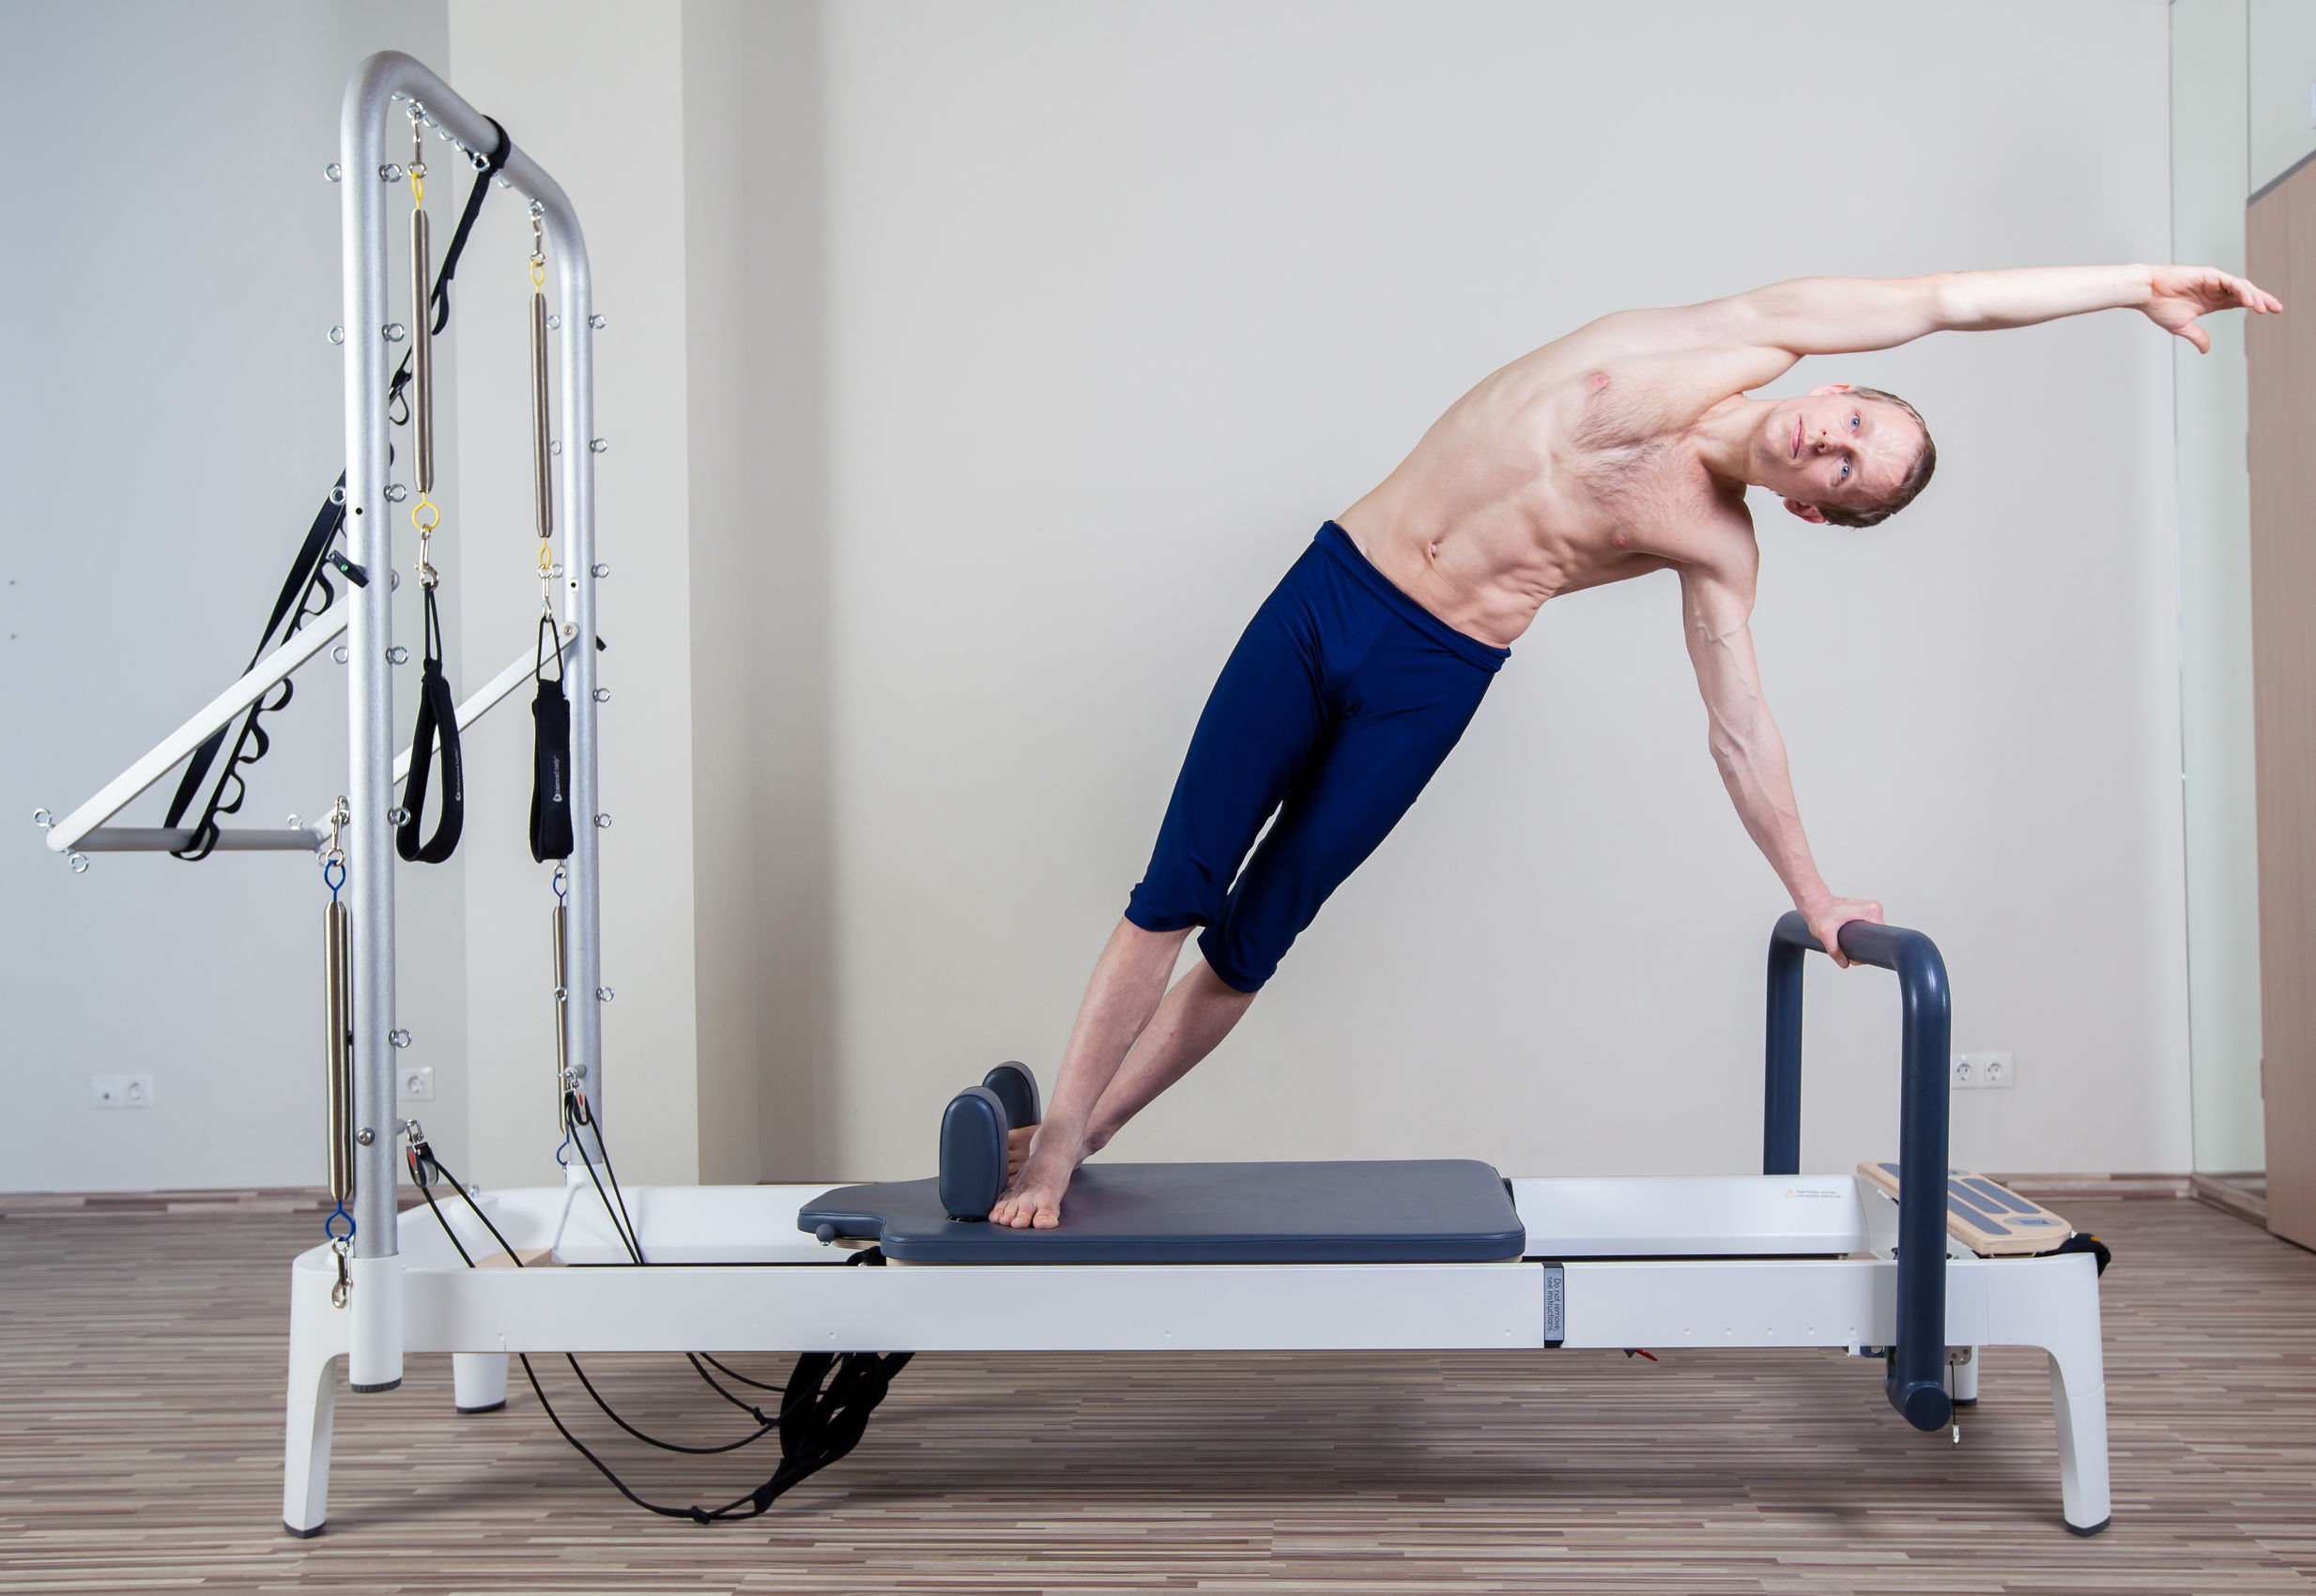 Pilates reformer workout exercises man at gym indoor